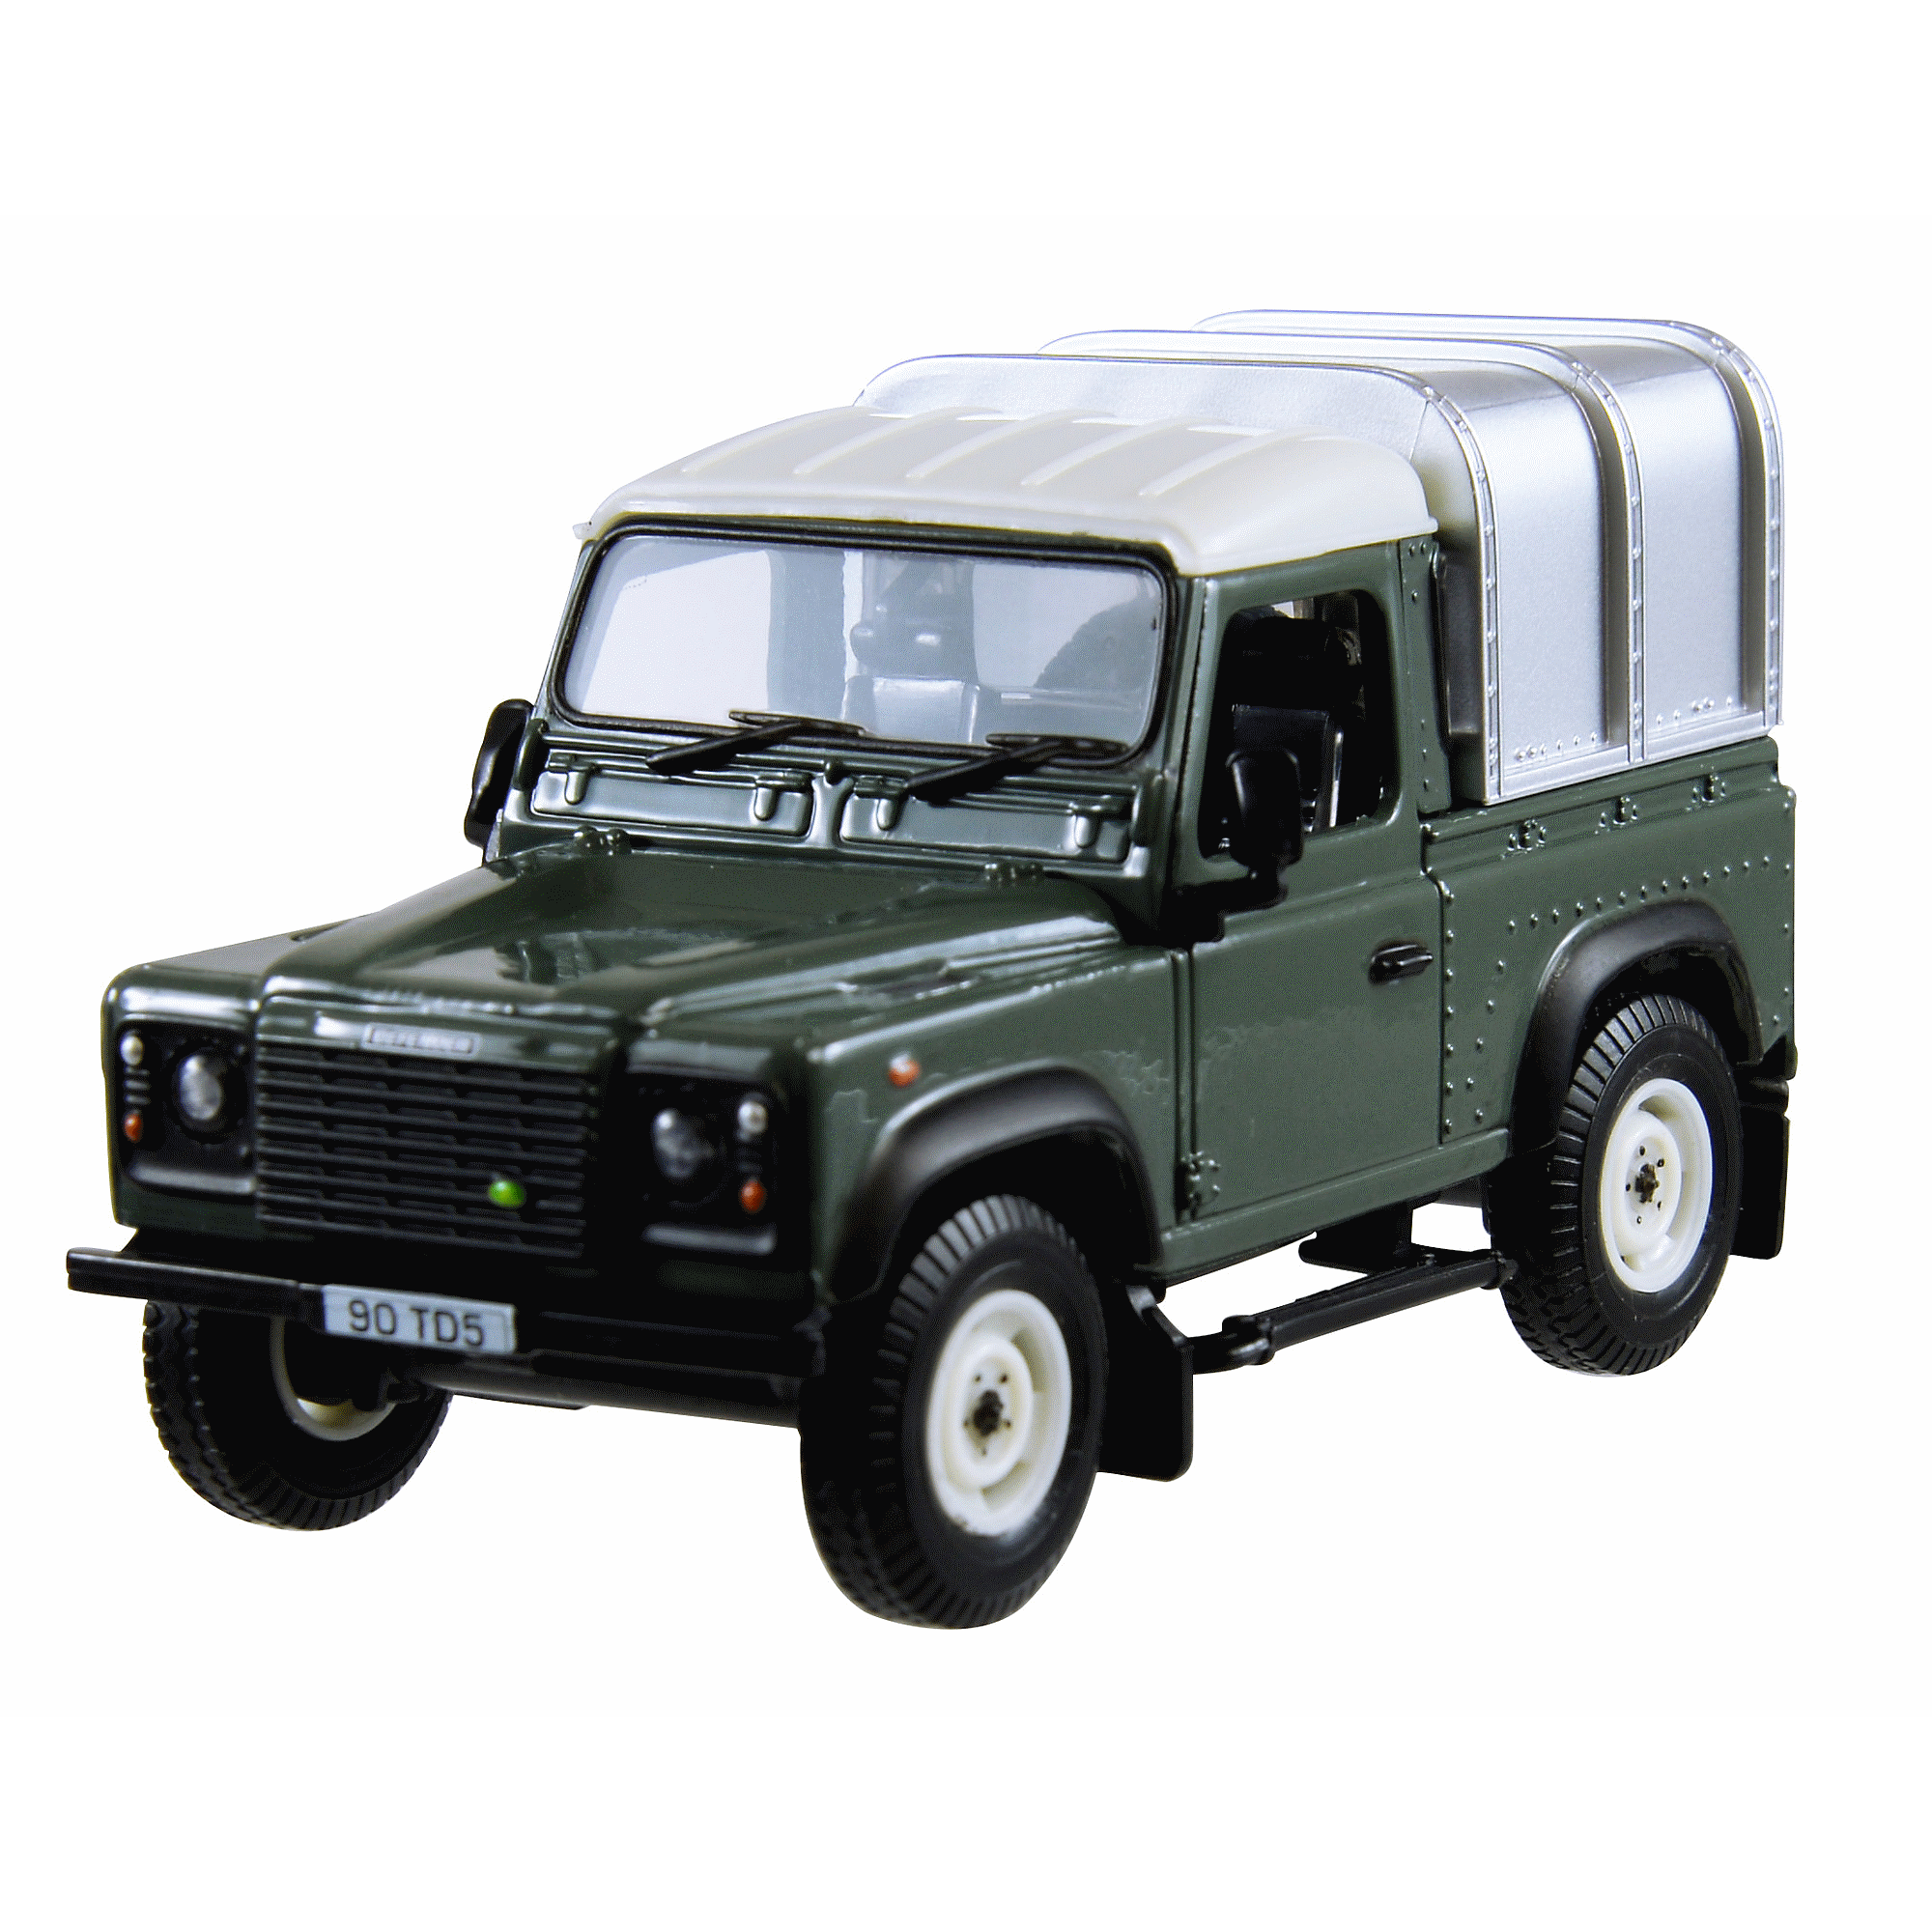 Britains BRITAINS Land Rover Defender 90 green & Canopy 1:32 Diecast Farm Vehicle 42732A1 